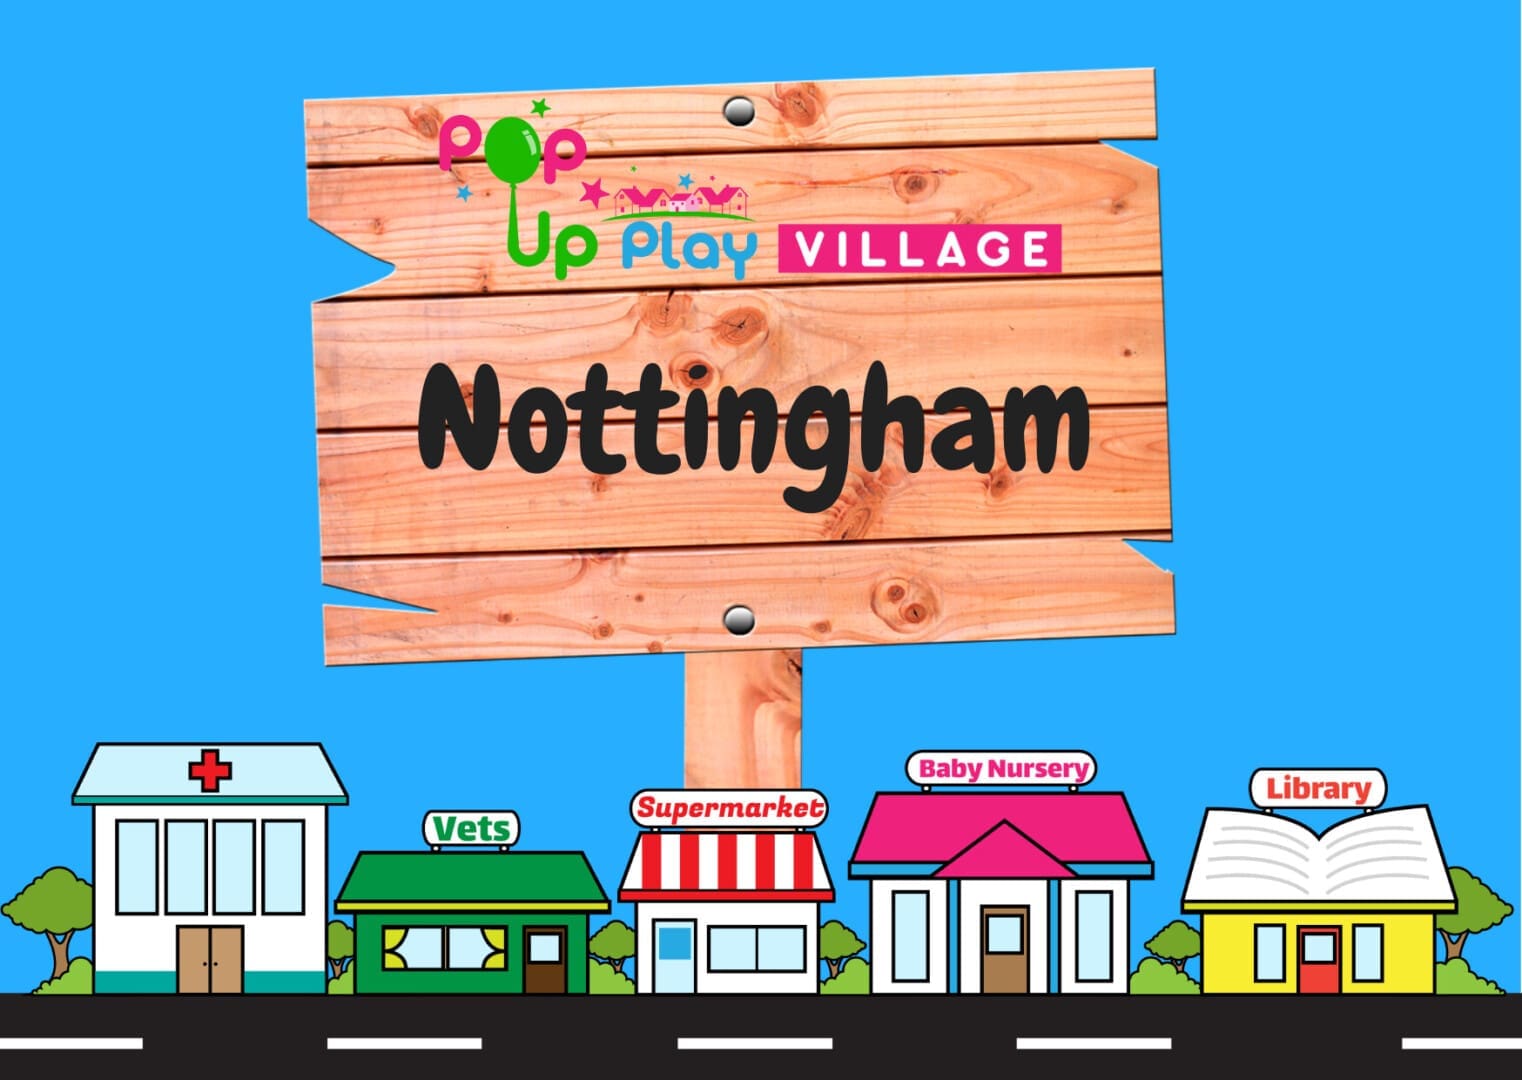 Pop Up Play Village – Bingham